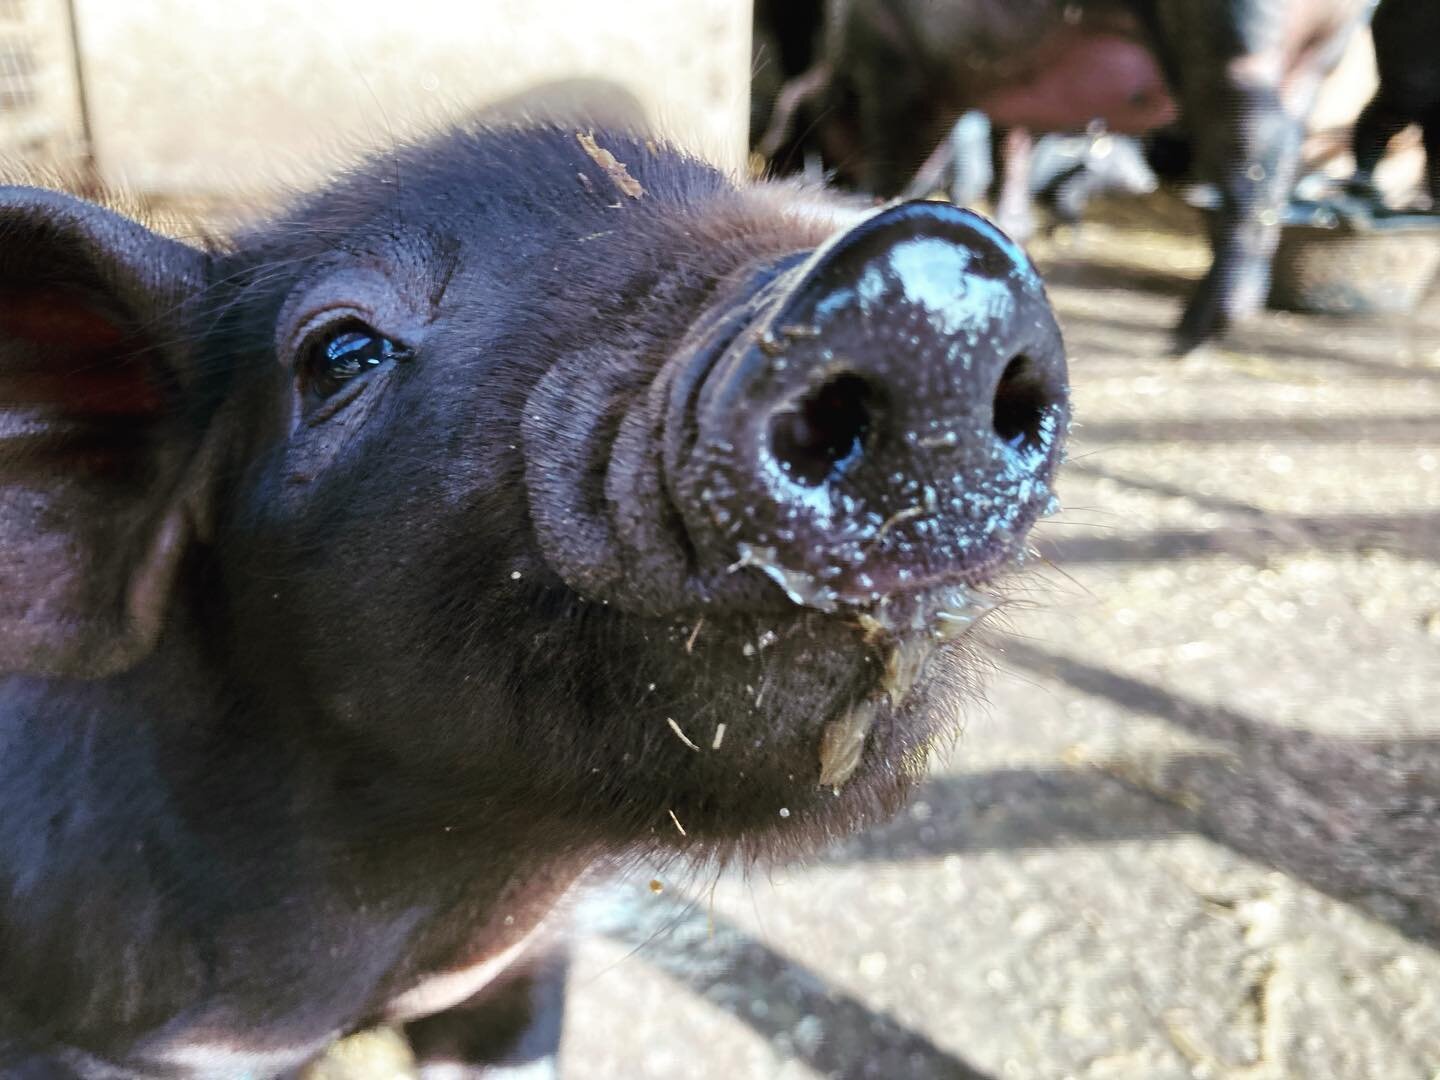 Happy little piglet this morning! Our recent new borns are becoming very confident! #piggy #pig #piglet #piglife #farm #pigfarm #farmlife #largeblackpigs #largeblackpigsofinstagram #british #britishfarming #britishpigs #earlymorning #sunshine